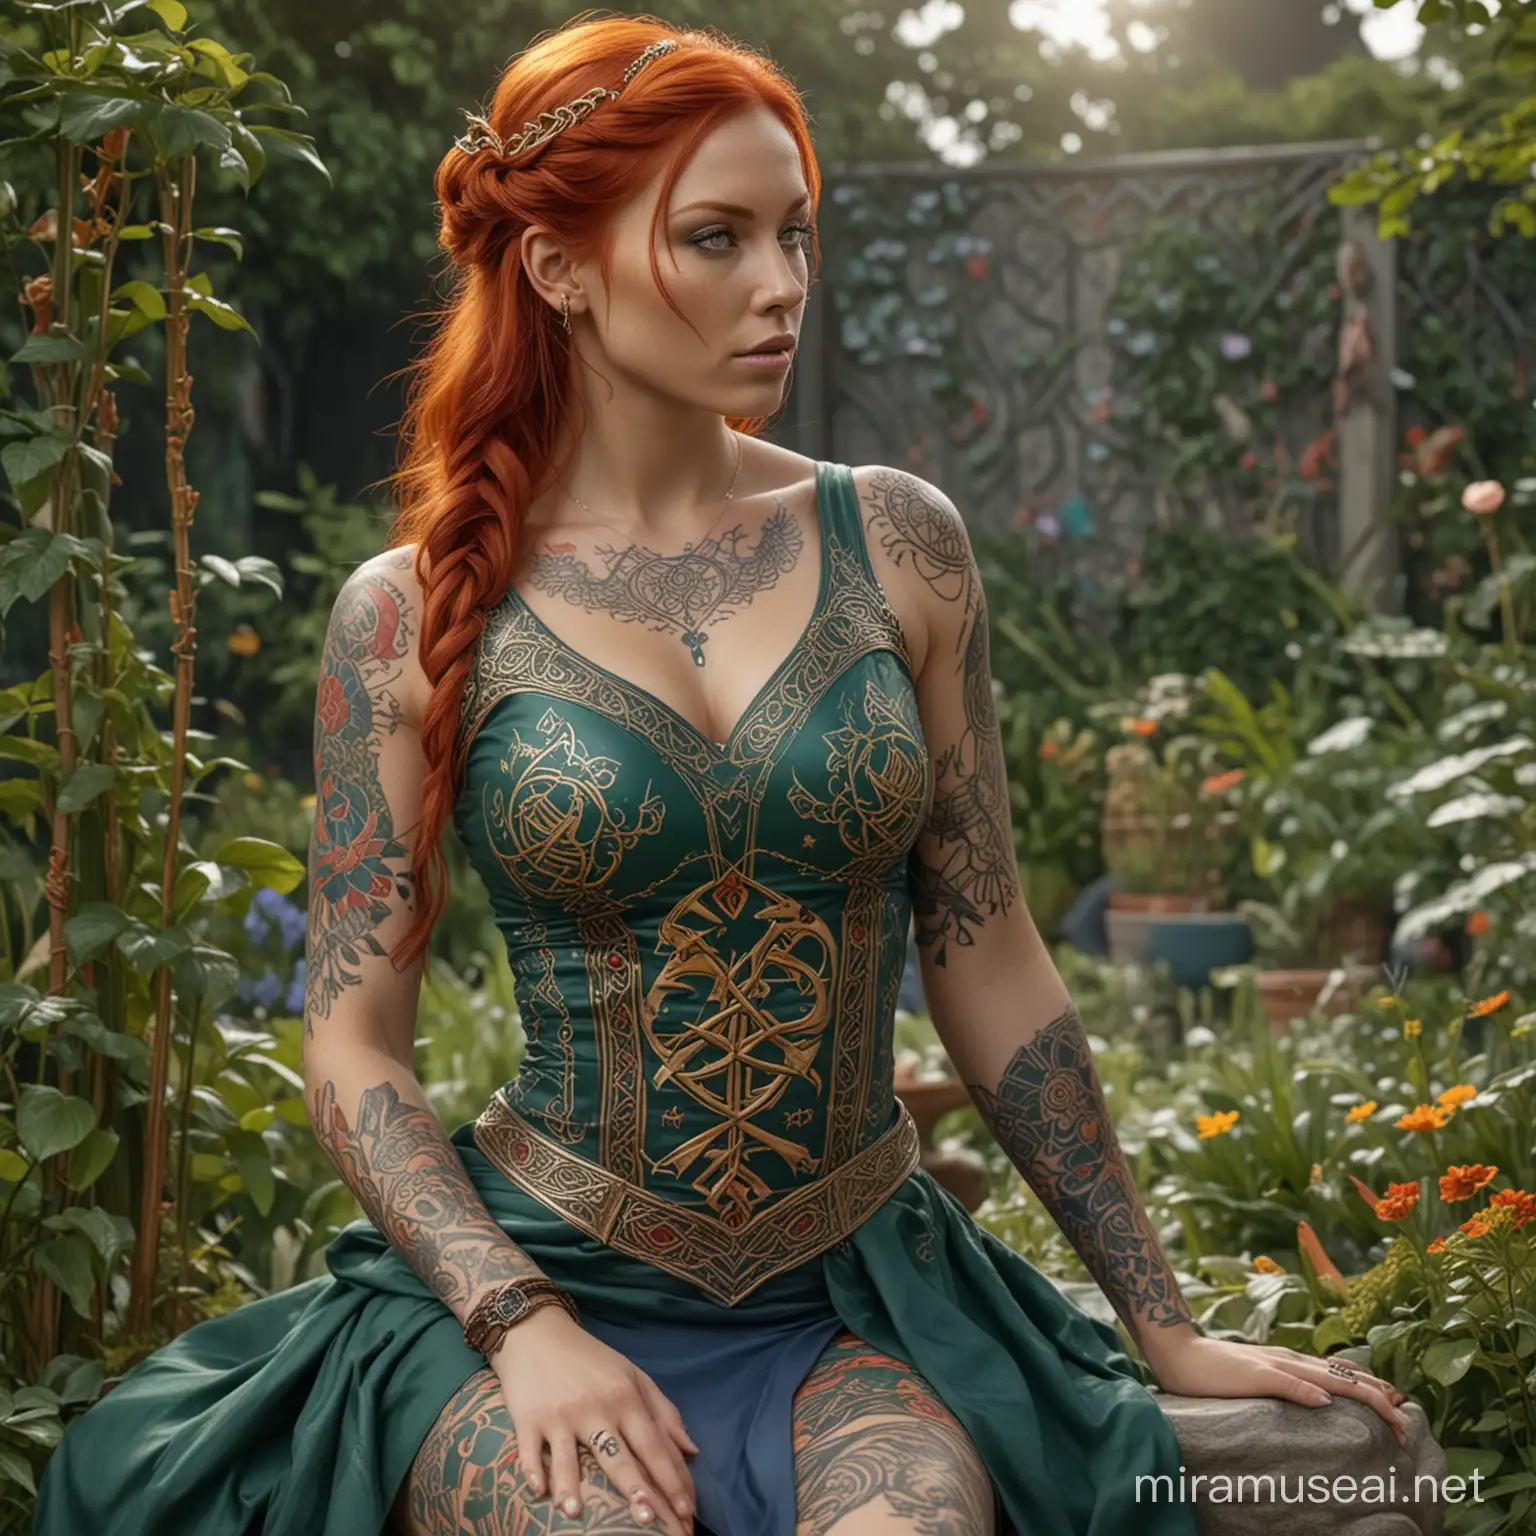 Fiery RedHaired Female Human in ElvenInspired Attire Relaxing in Enchanted Garden